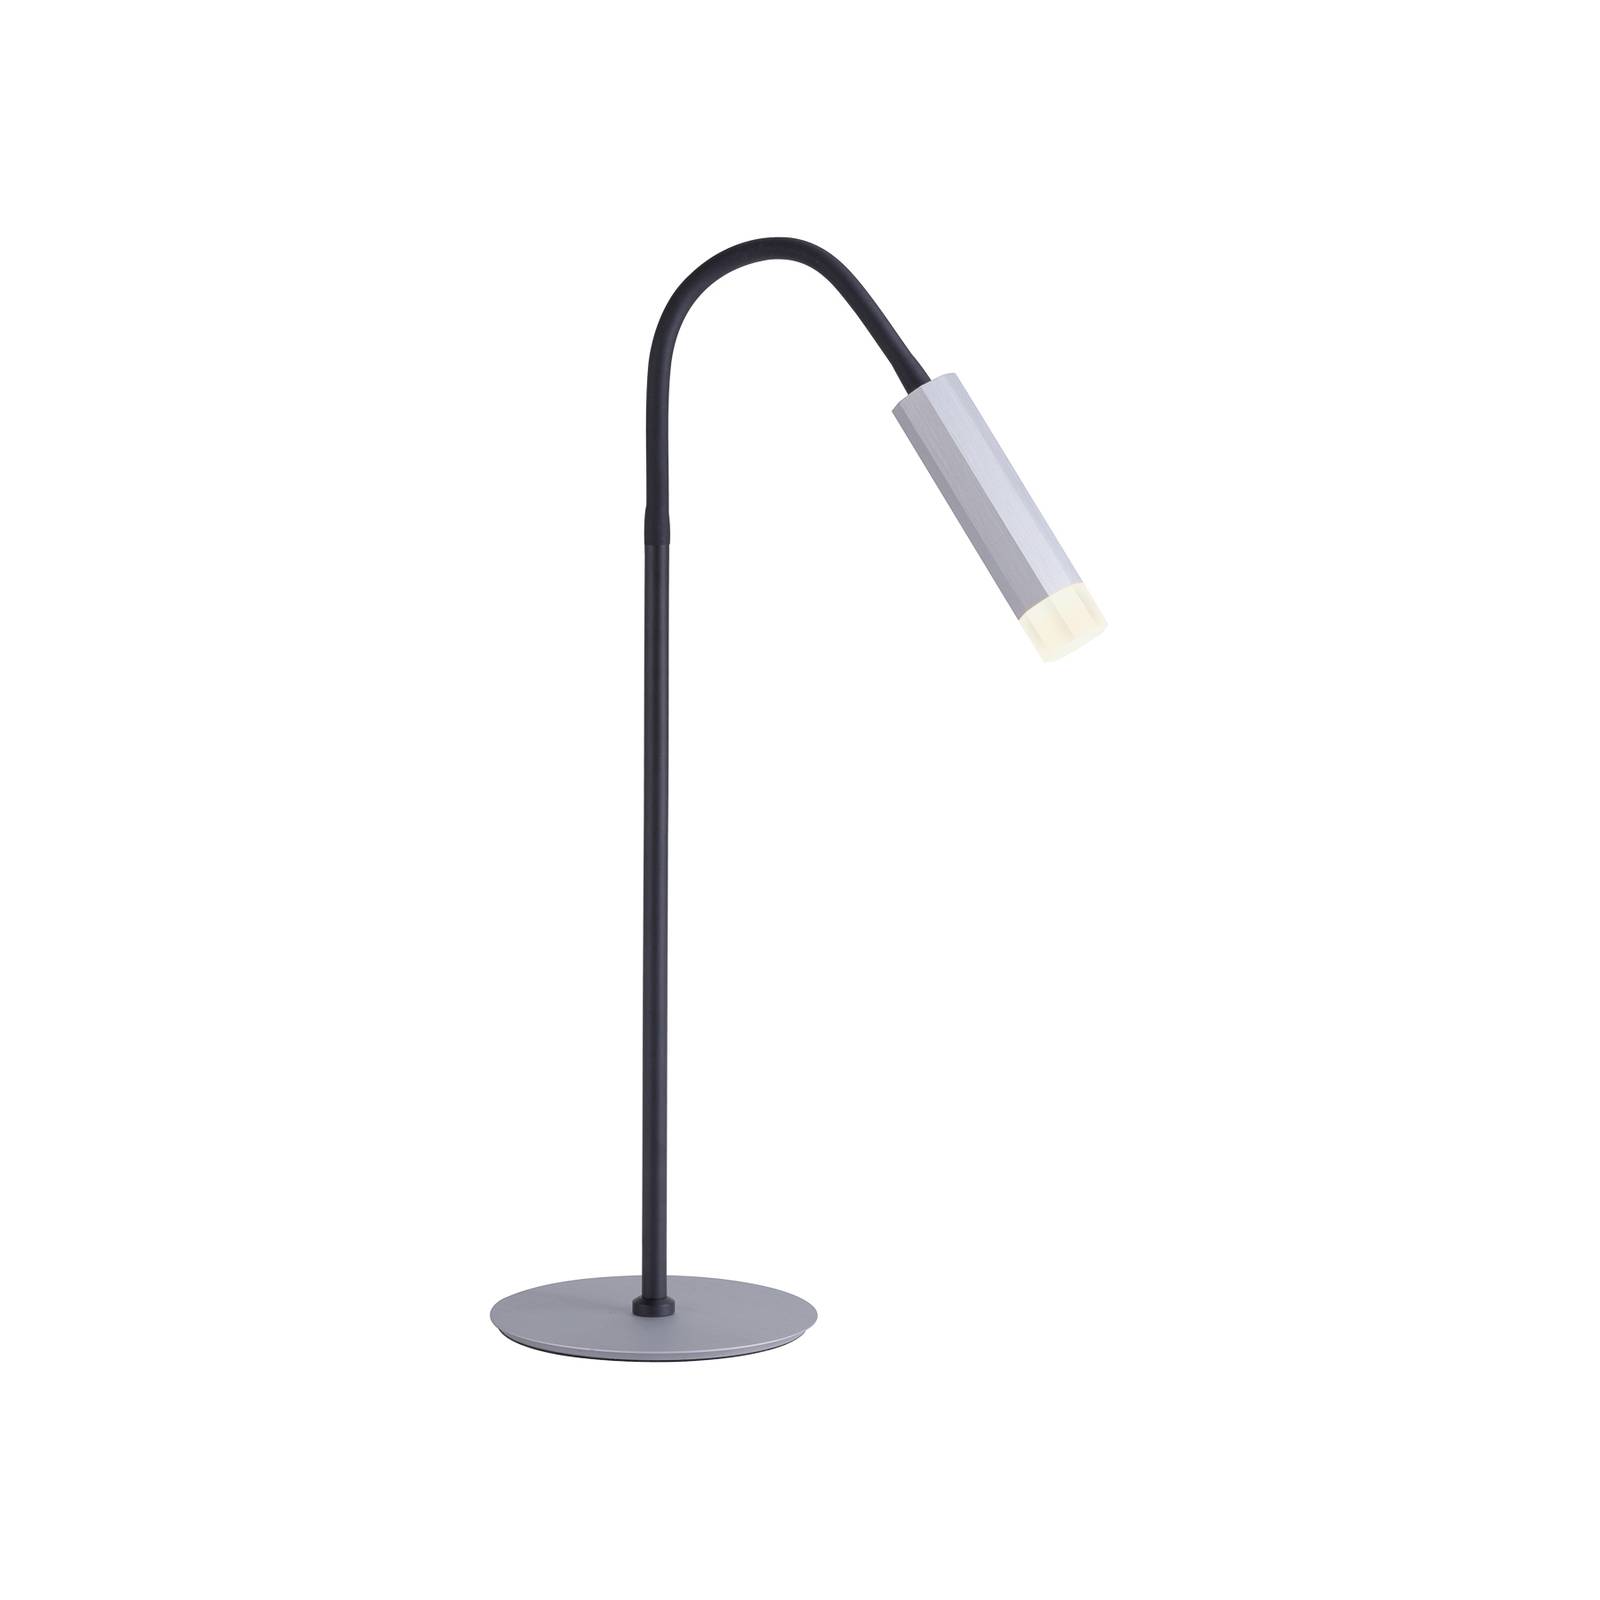 Image of PURE Gemin lampe à poser LED argentée 4012248351680